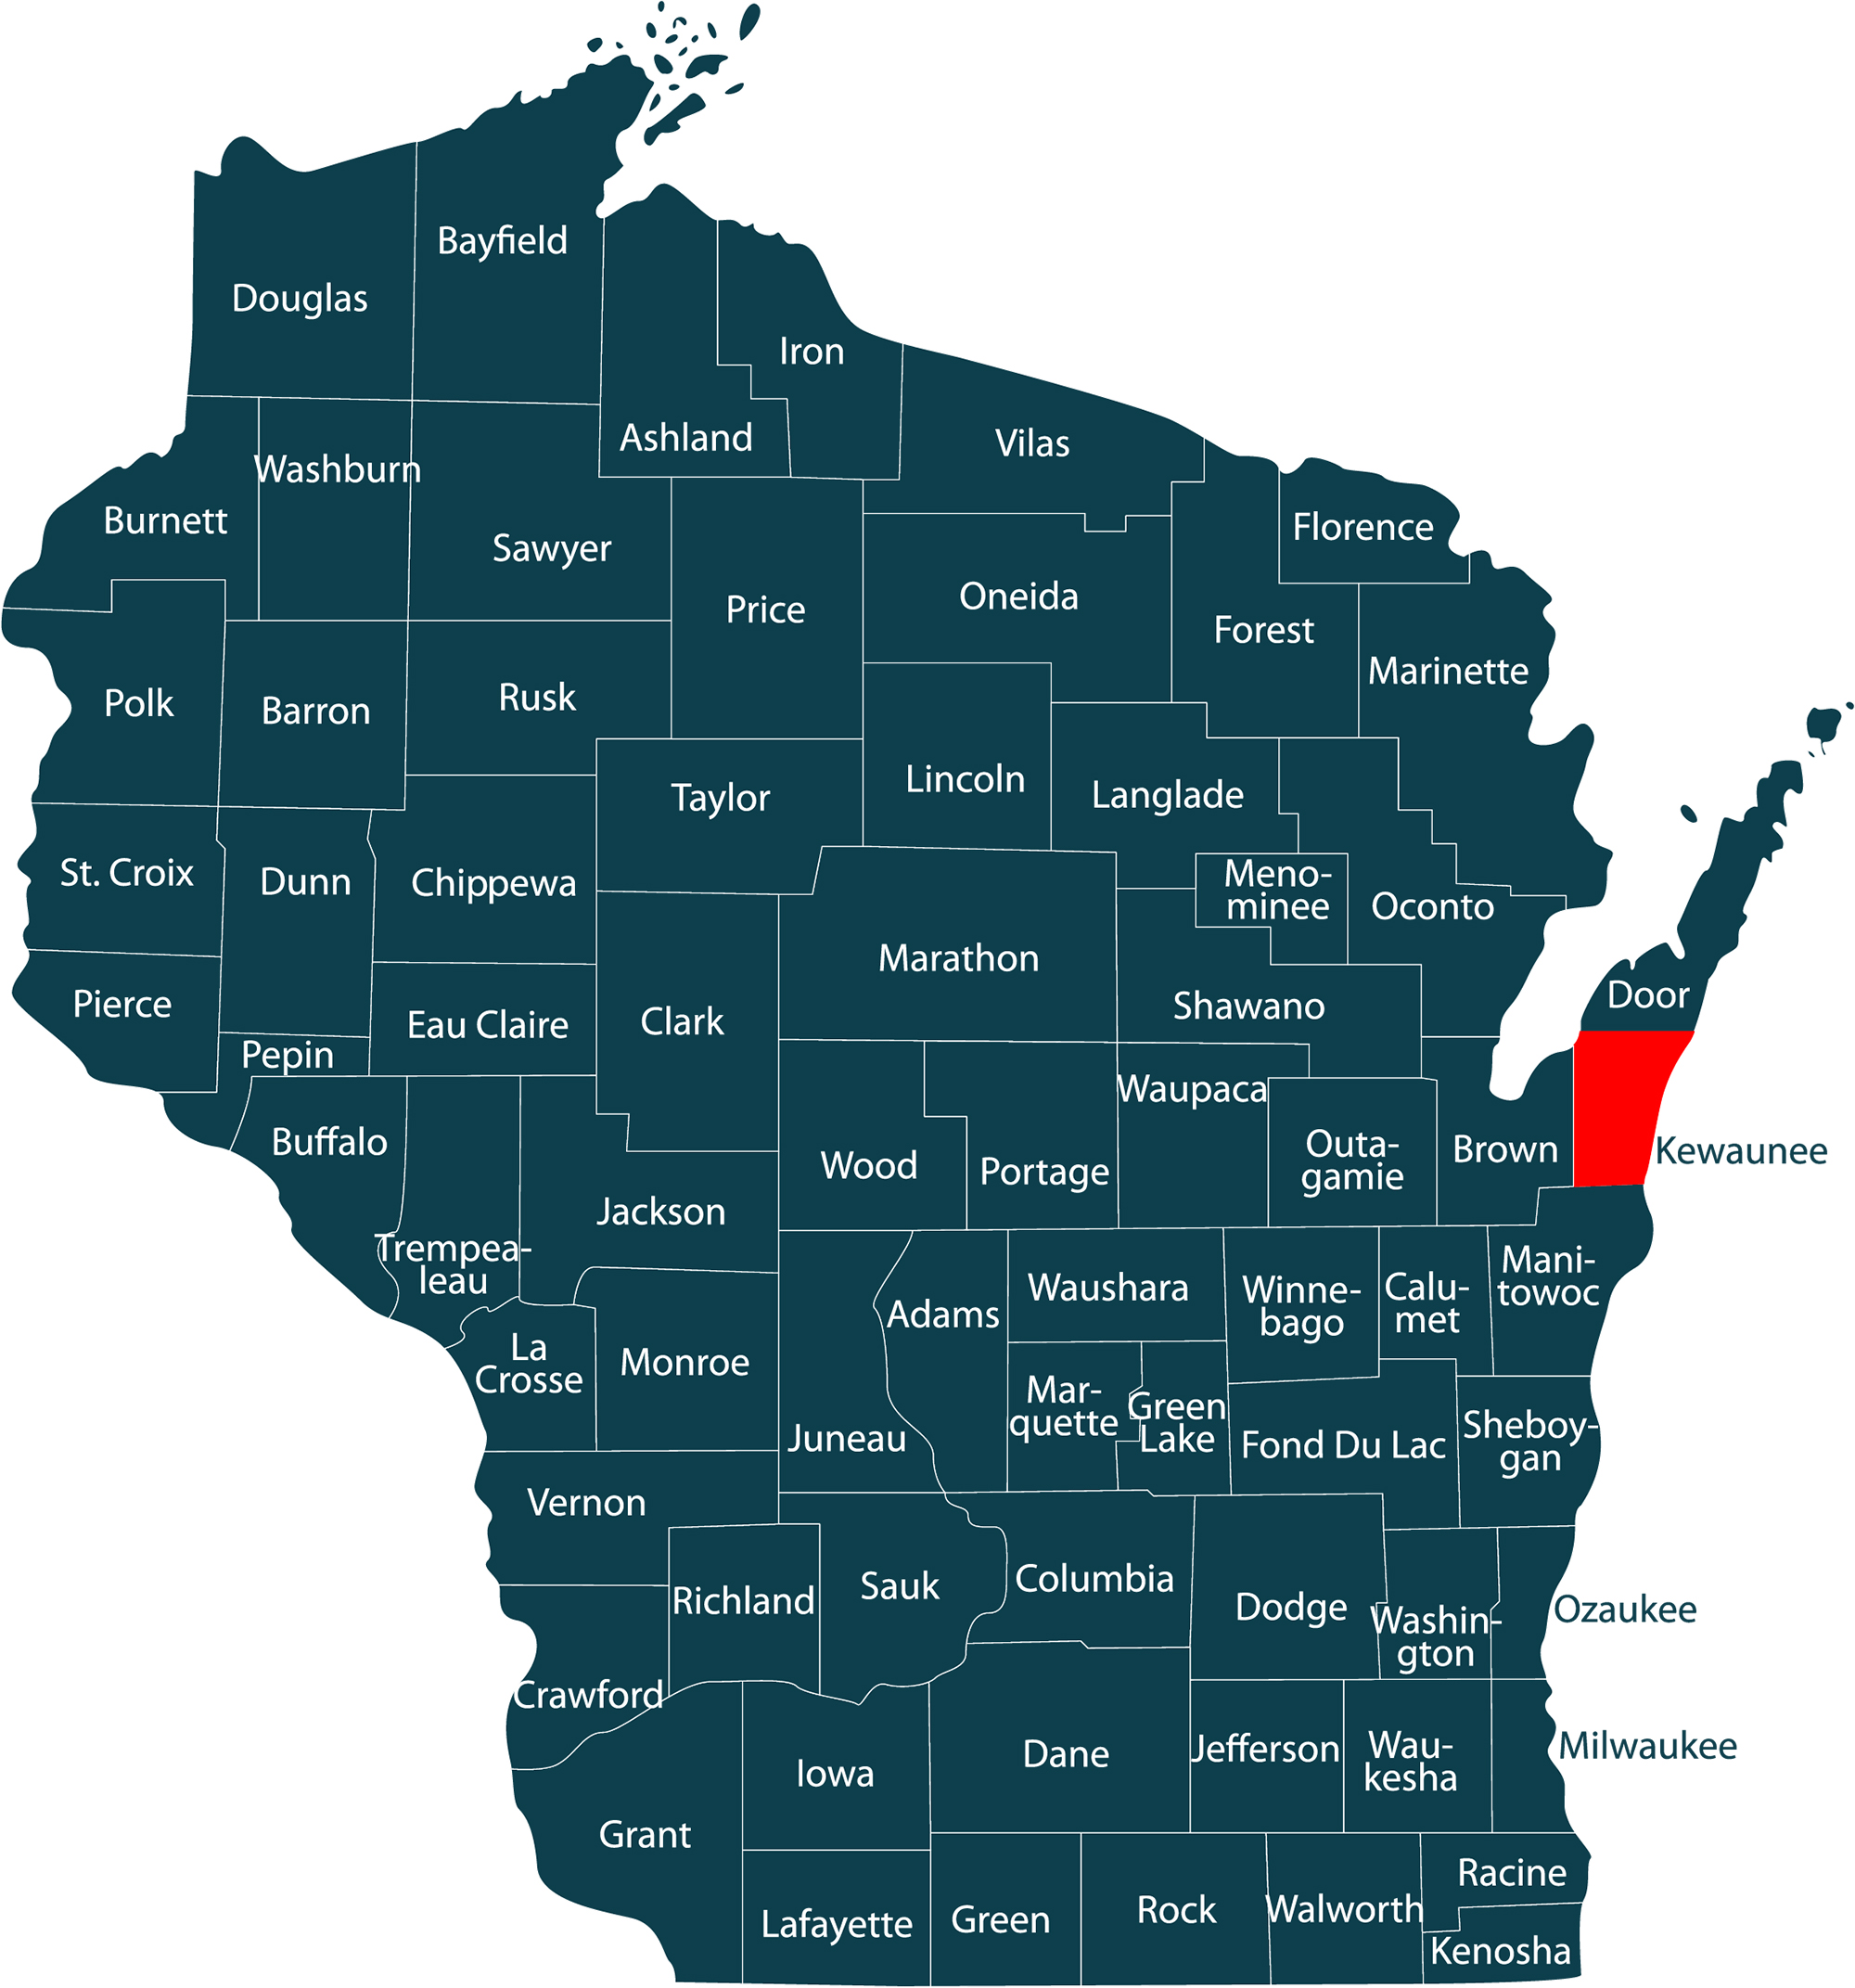 Kewaunee County Wisconsin @ wisconsin.com